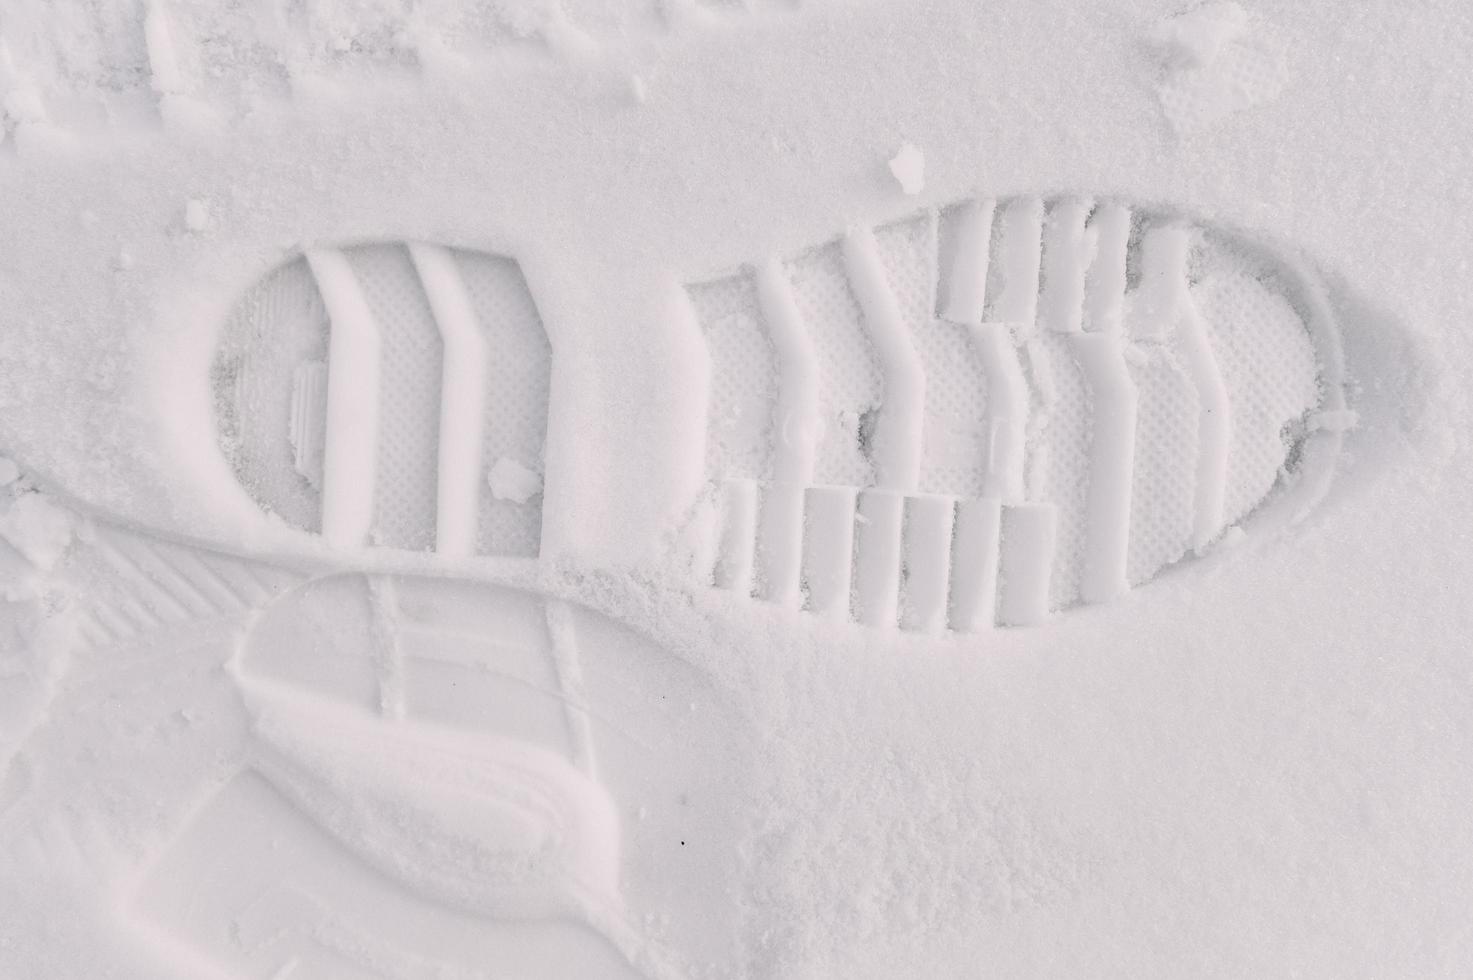 Boot footprint shoe tread texture in snow photo